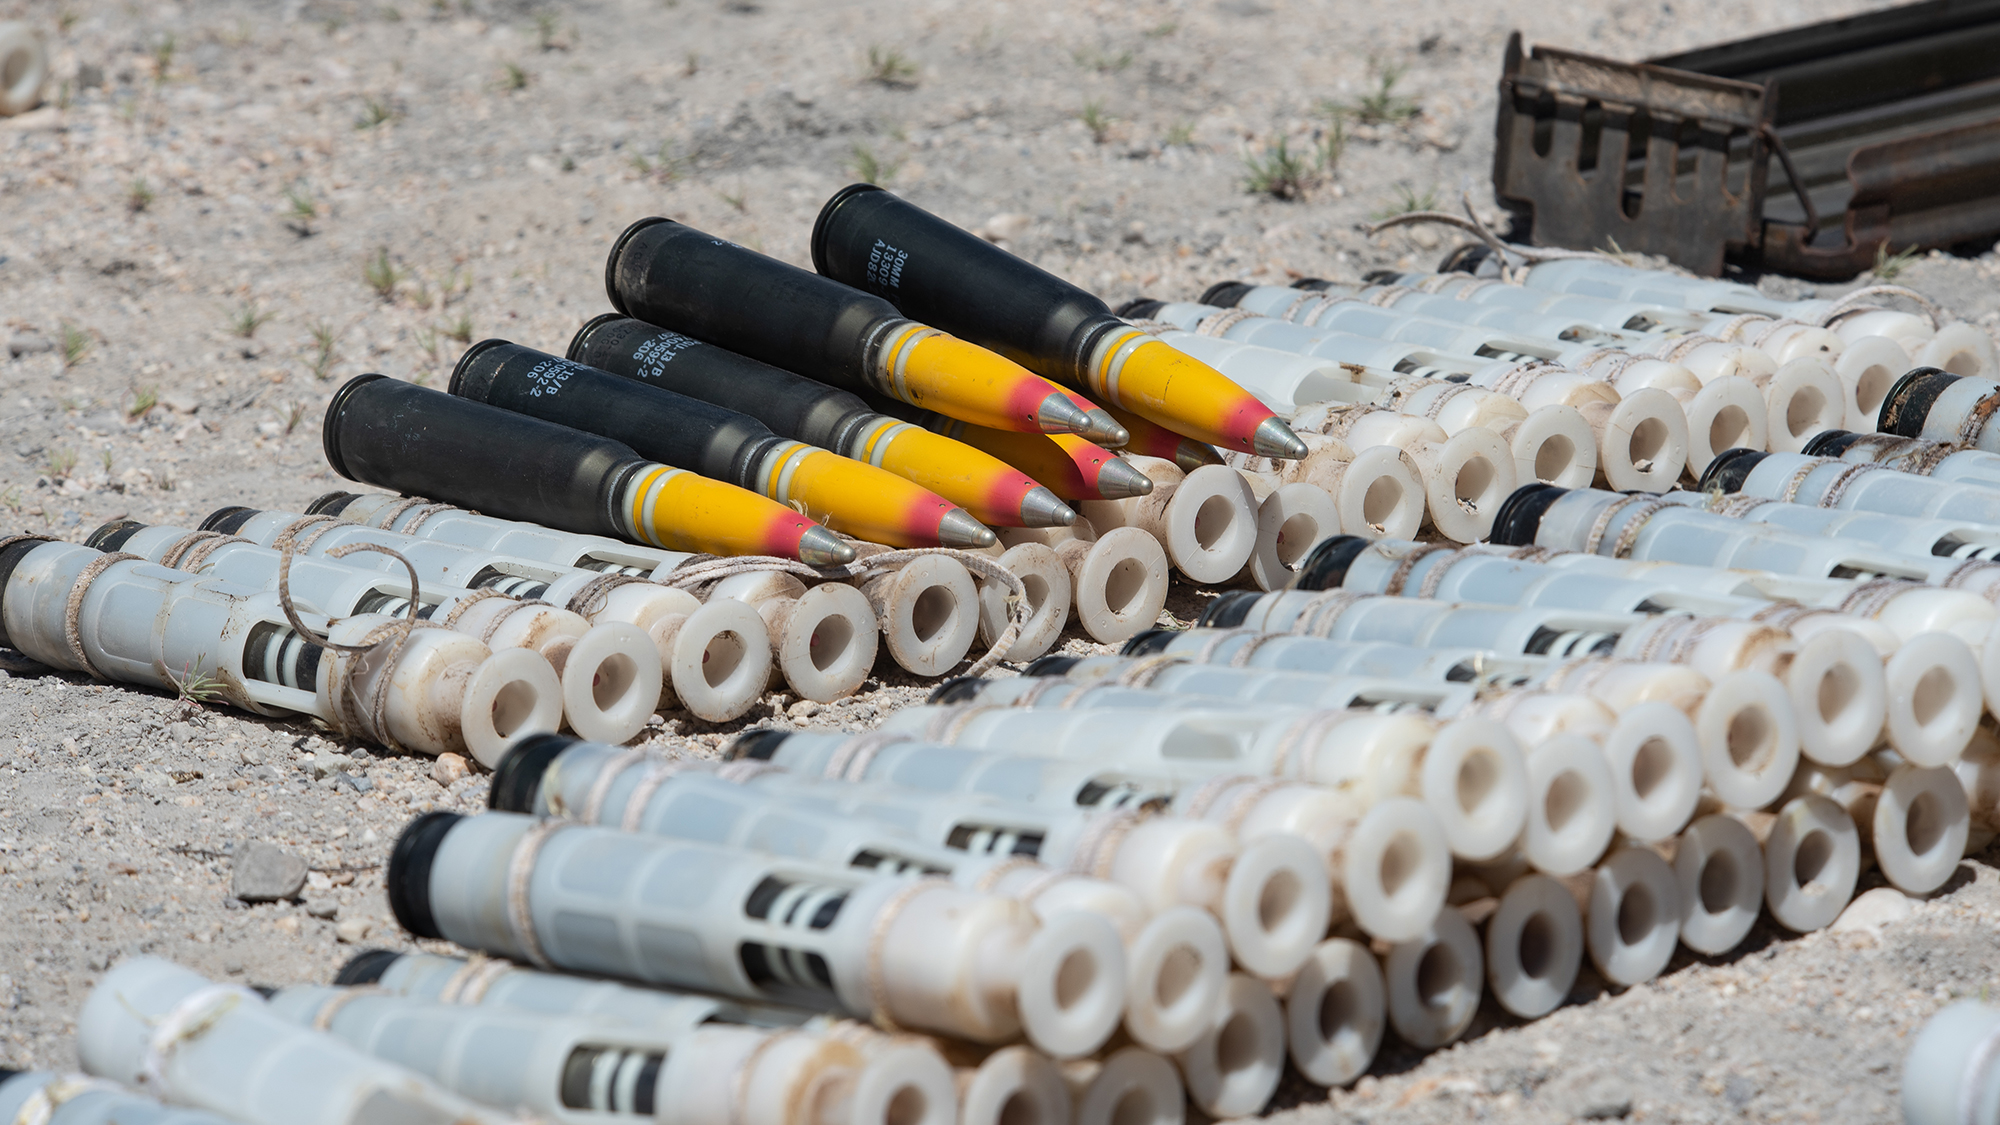 Depleted uranium shells for Ukraine are dense, armor-piercing ammunition